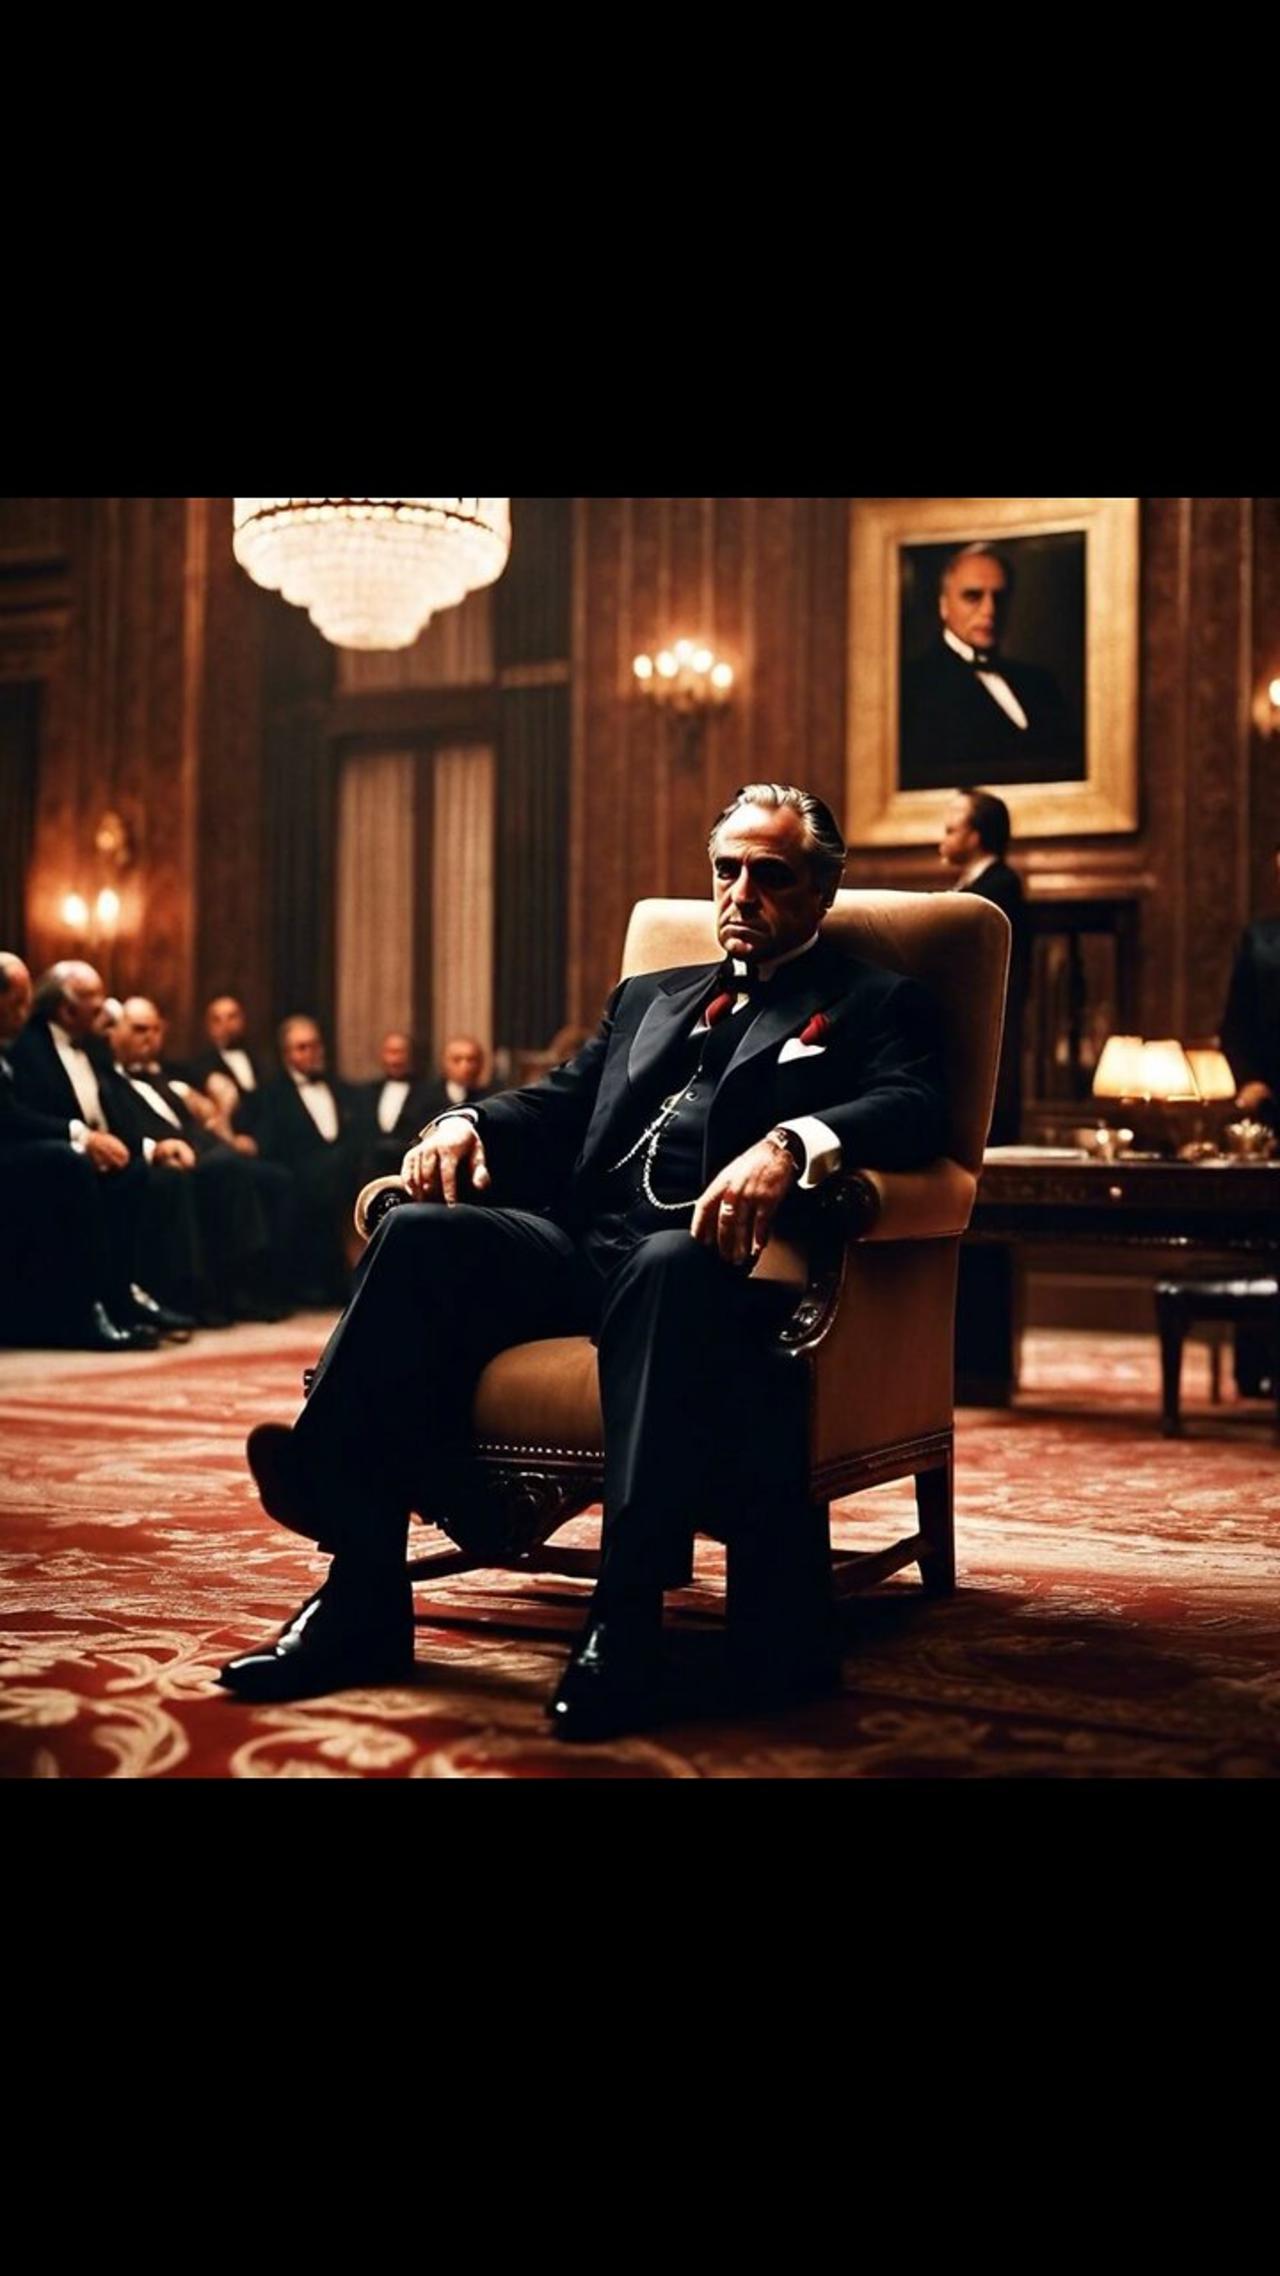 The Godfather, Vito Corleone  #TheGodfather #VitoCorleone #CinematicClassic